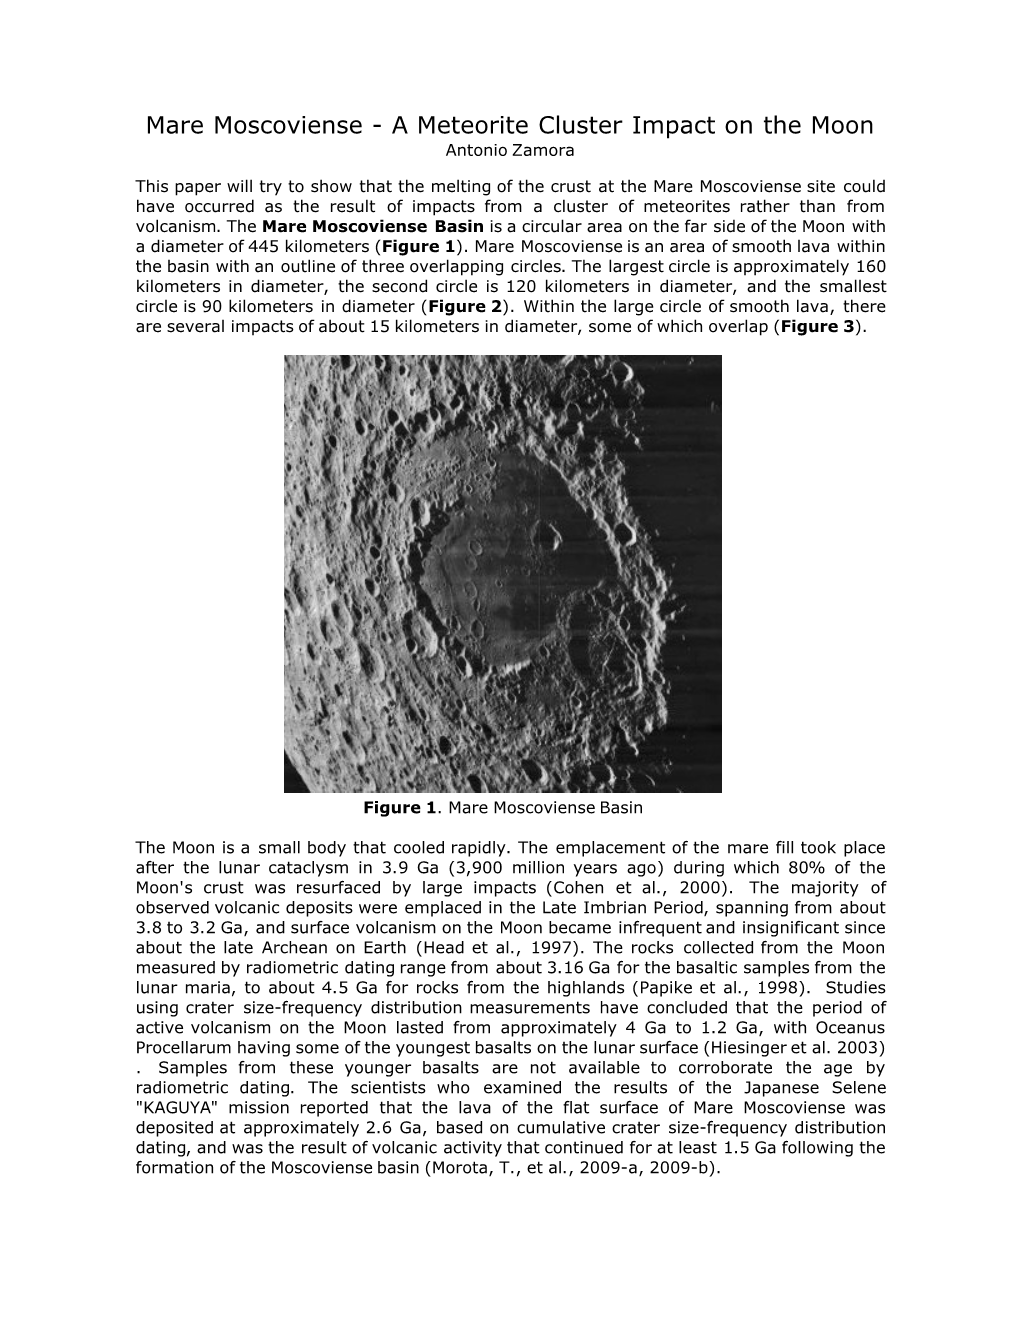 Mare Moscoviense - a Meteorite Cluster Impact on the Moon Antonio Zamora